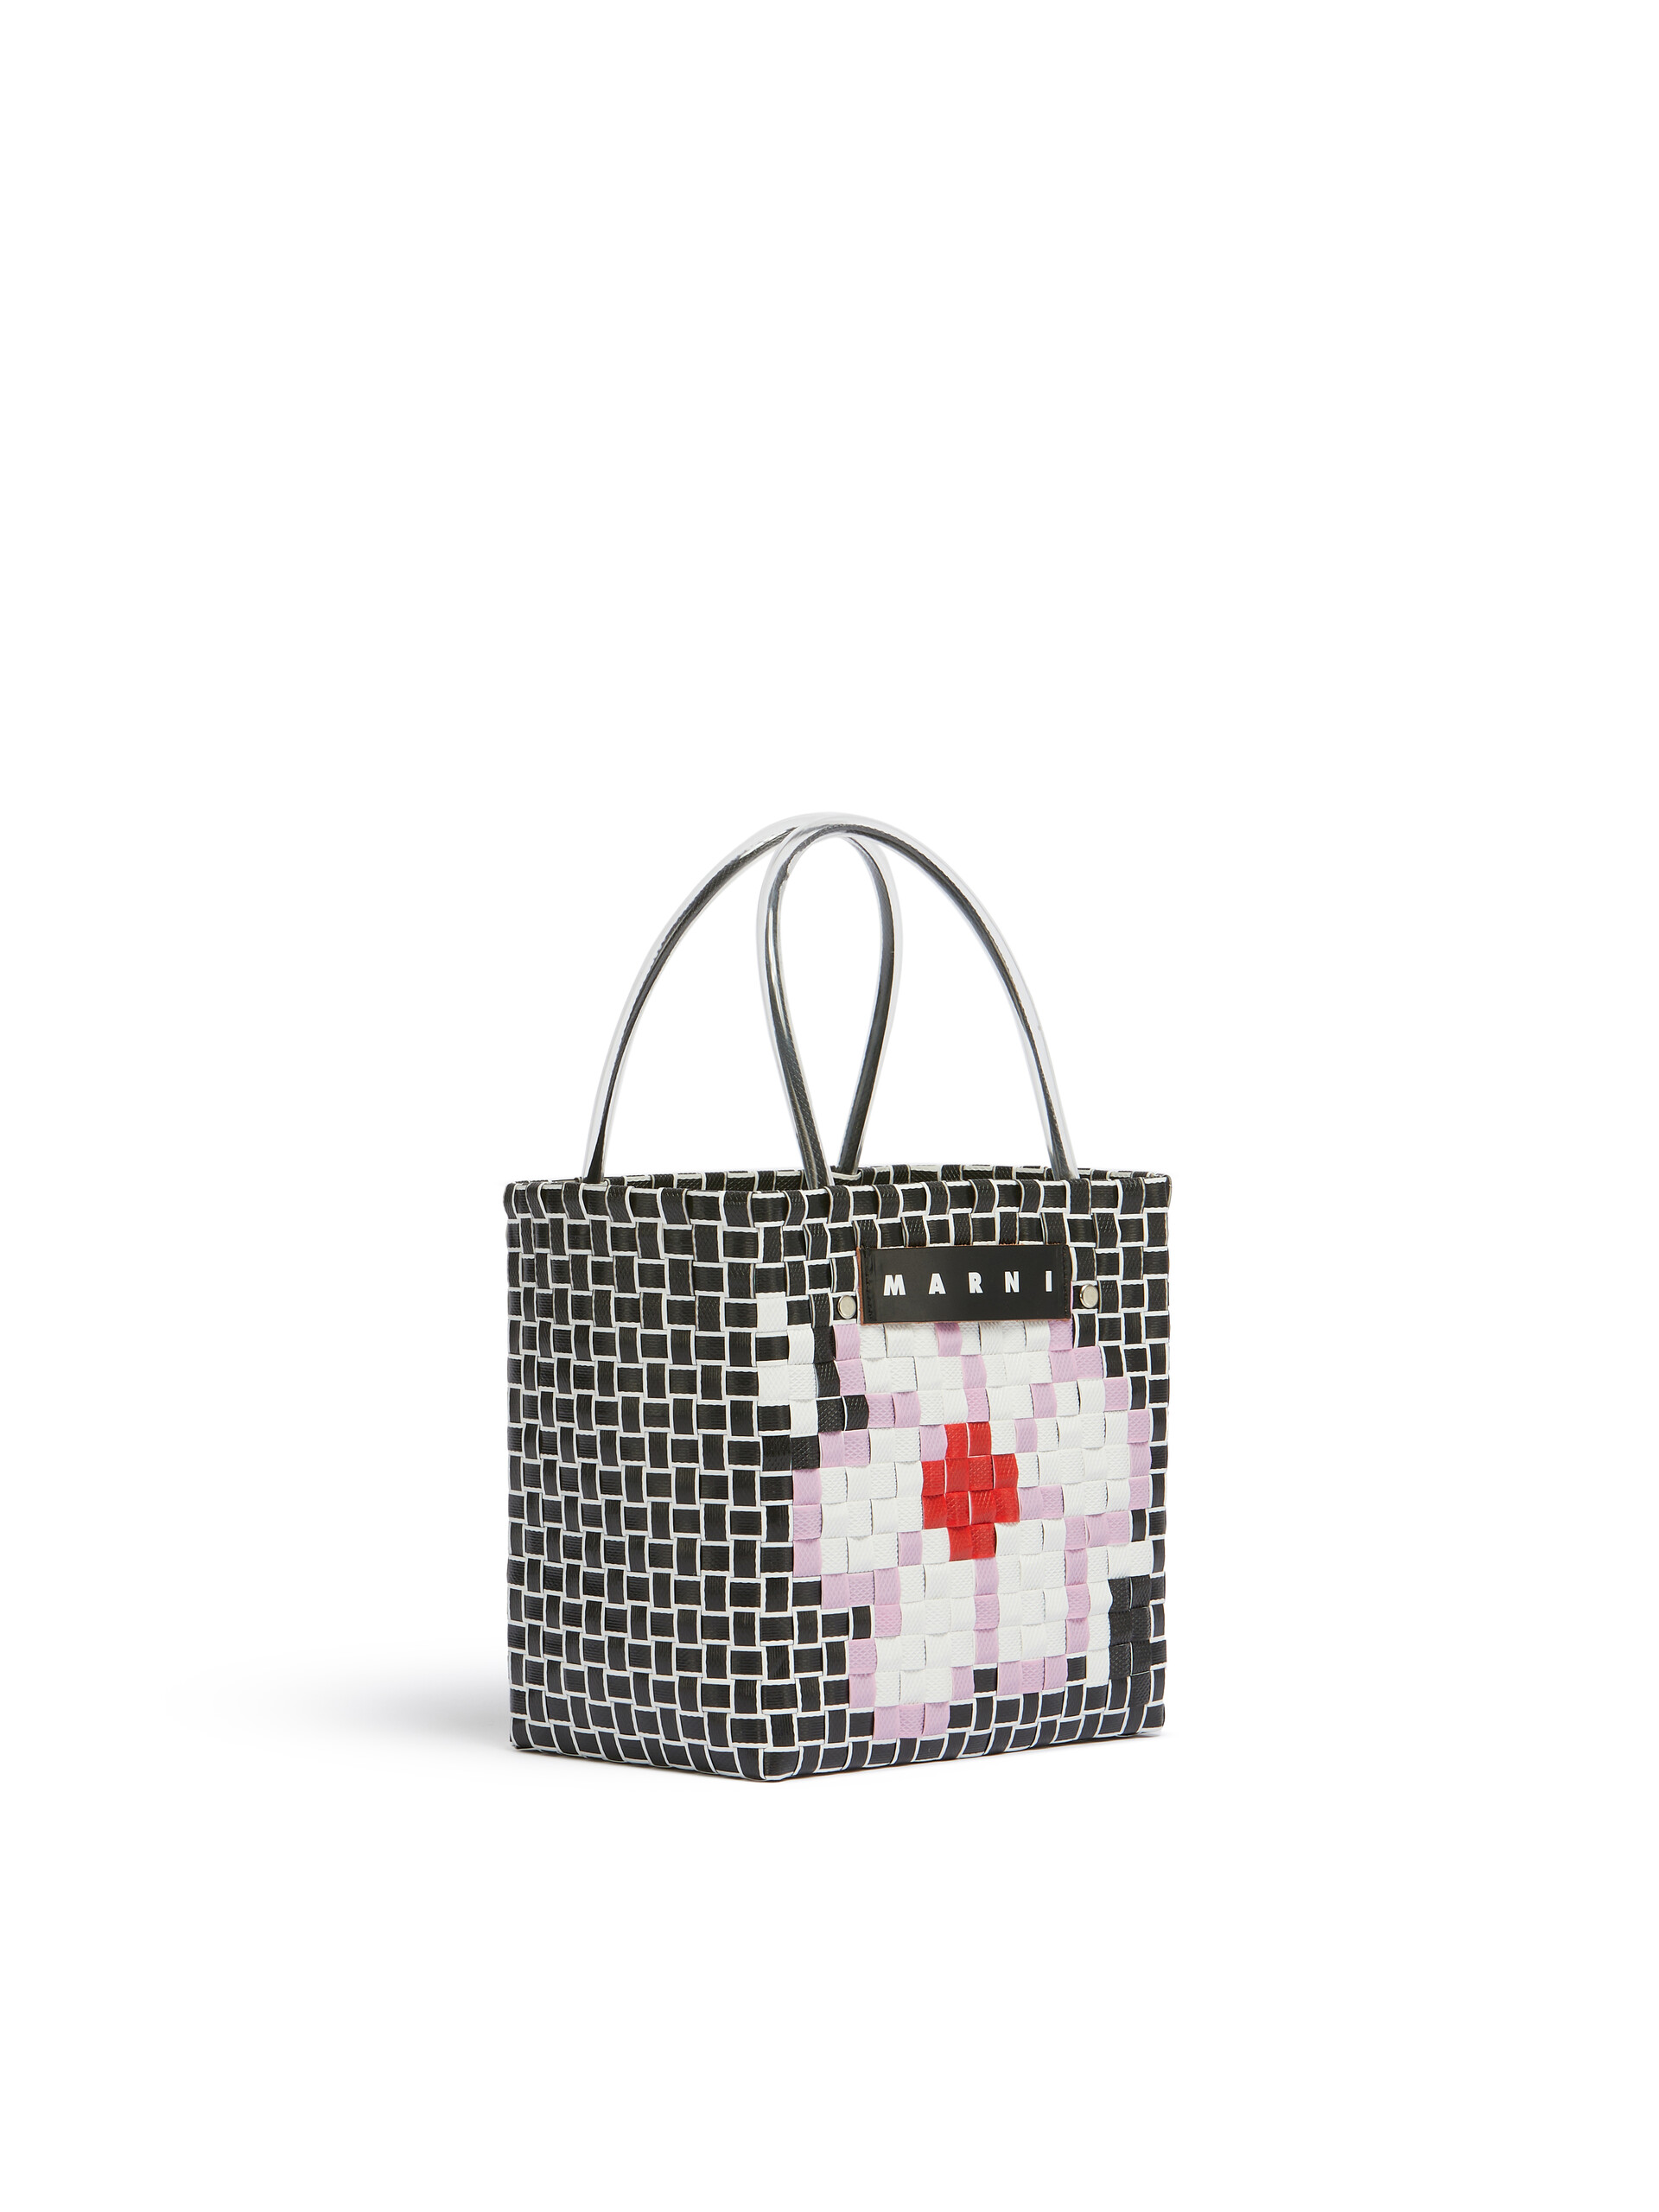 Black and white MARNI MARKET MINI FLOWER BASKET bag - Shopping Bags - Image 2